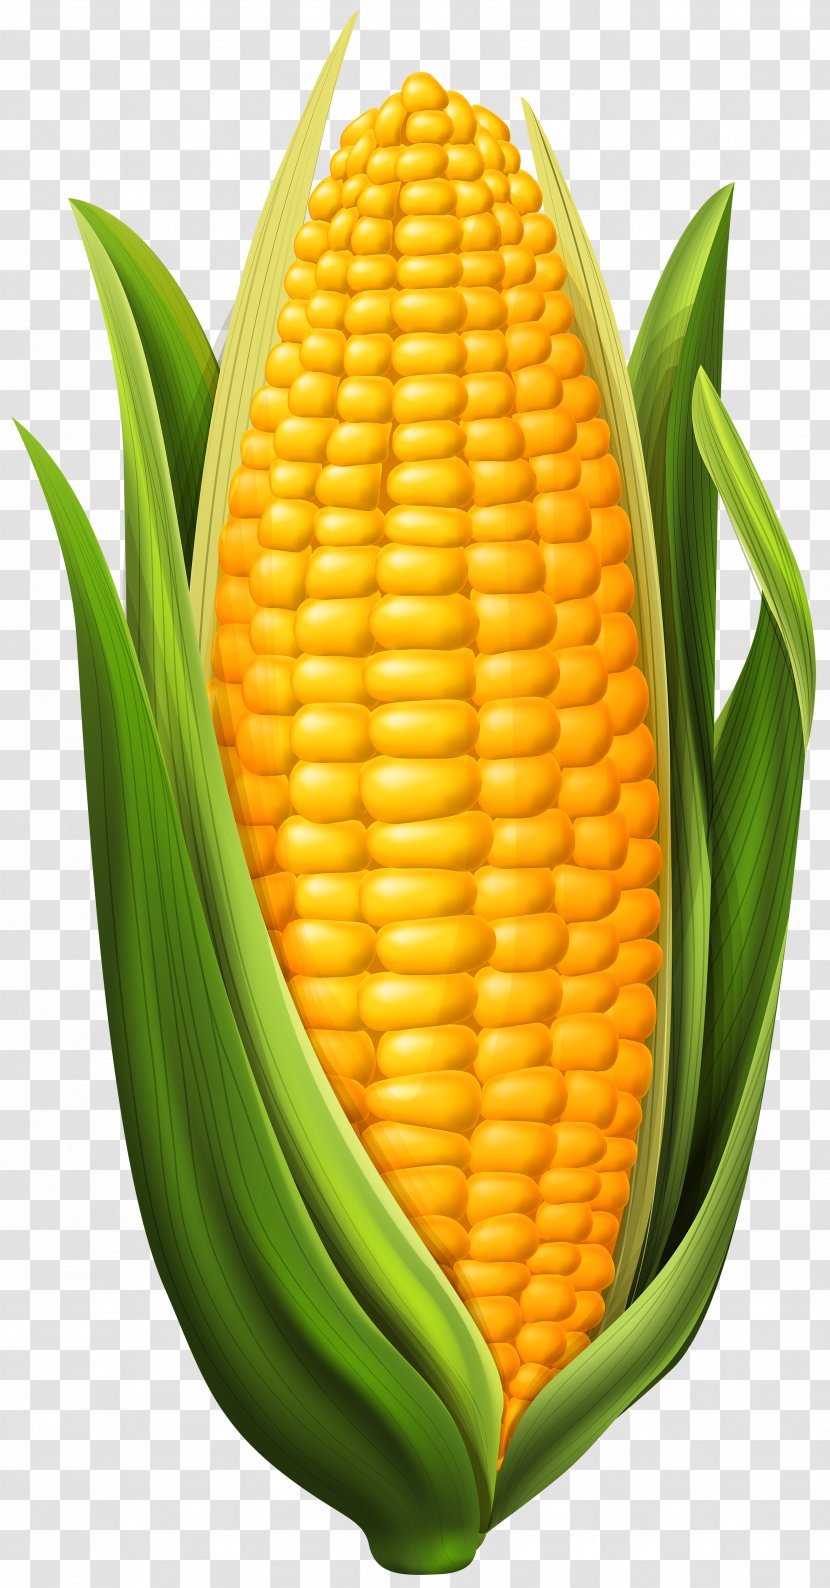 Corn On The Cob Maize Clip Art - Candy - Image Transparent PNG